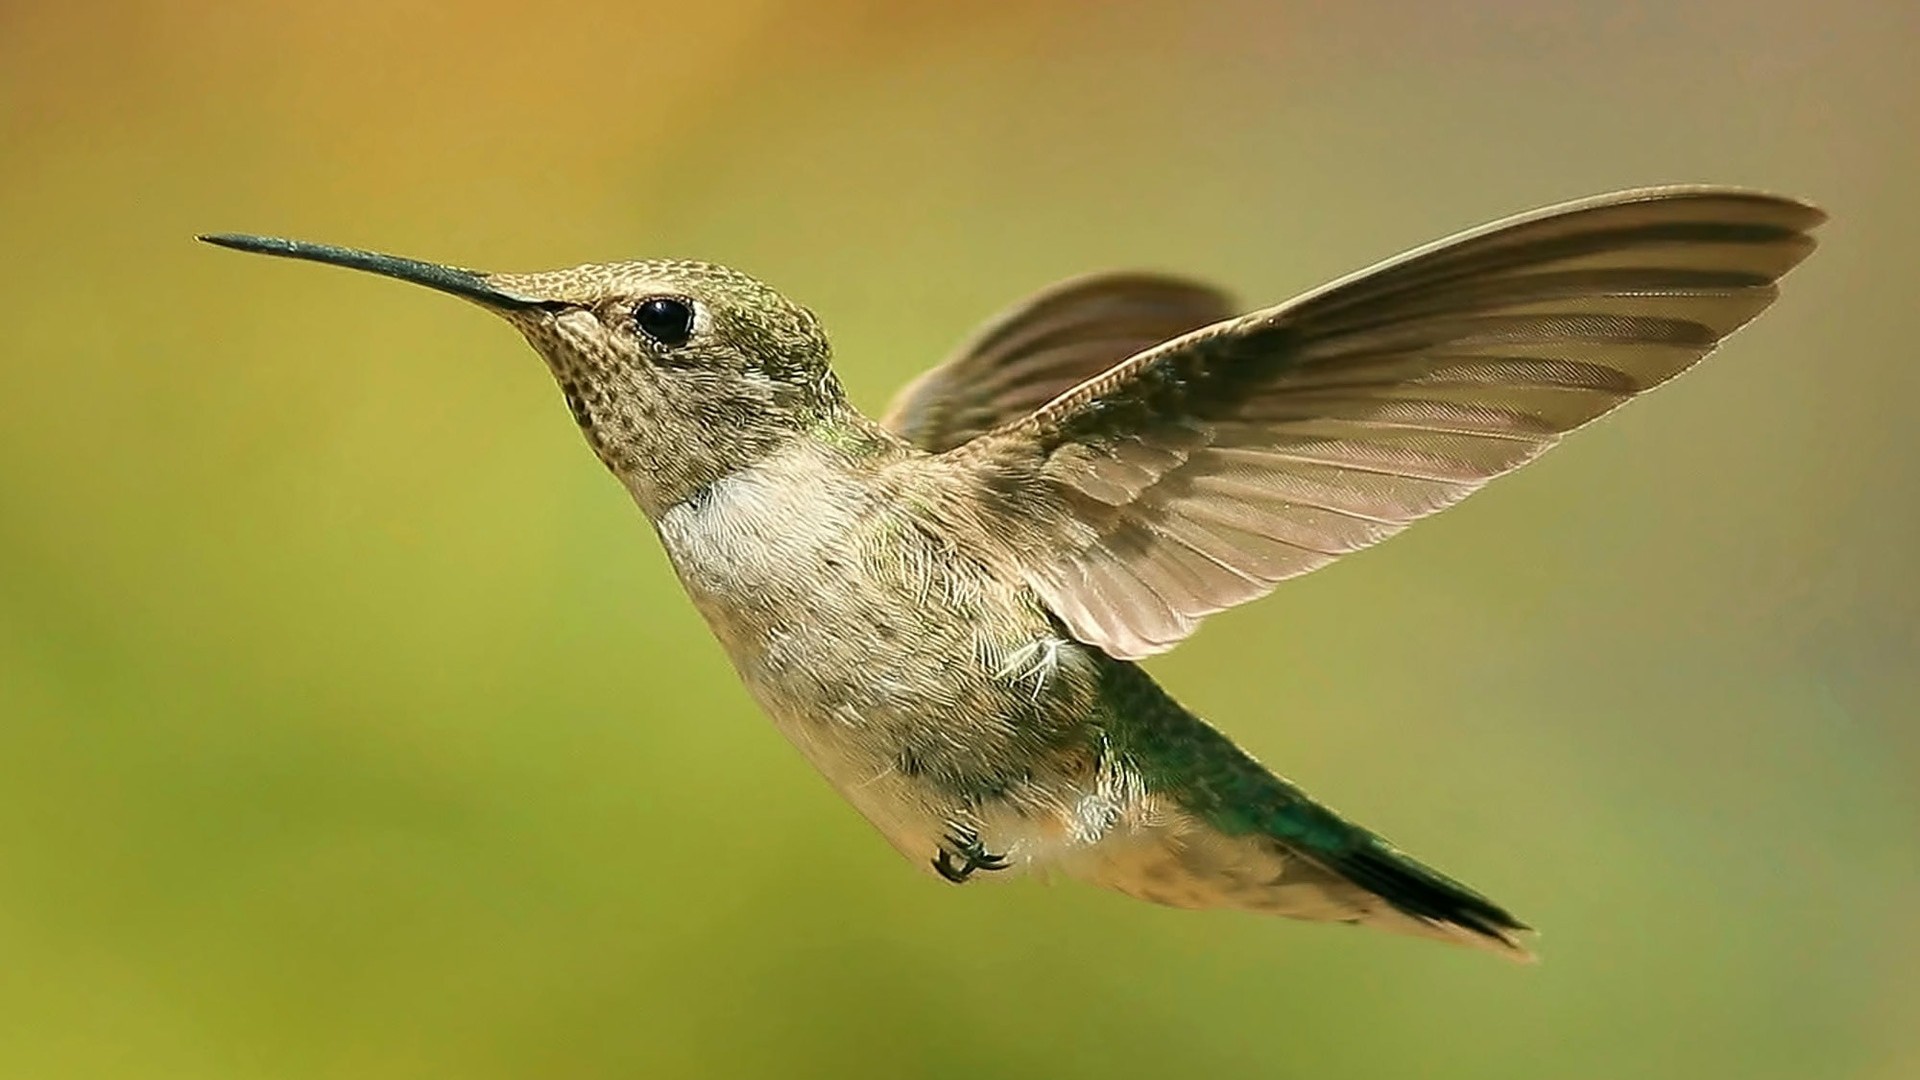 Hummingbirds images Hummingbird in Flight HD wallpaper and ...